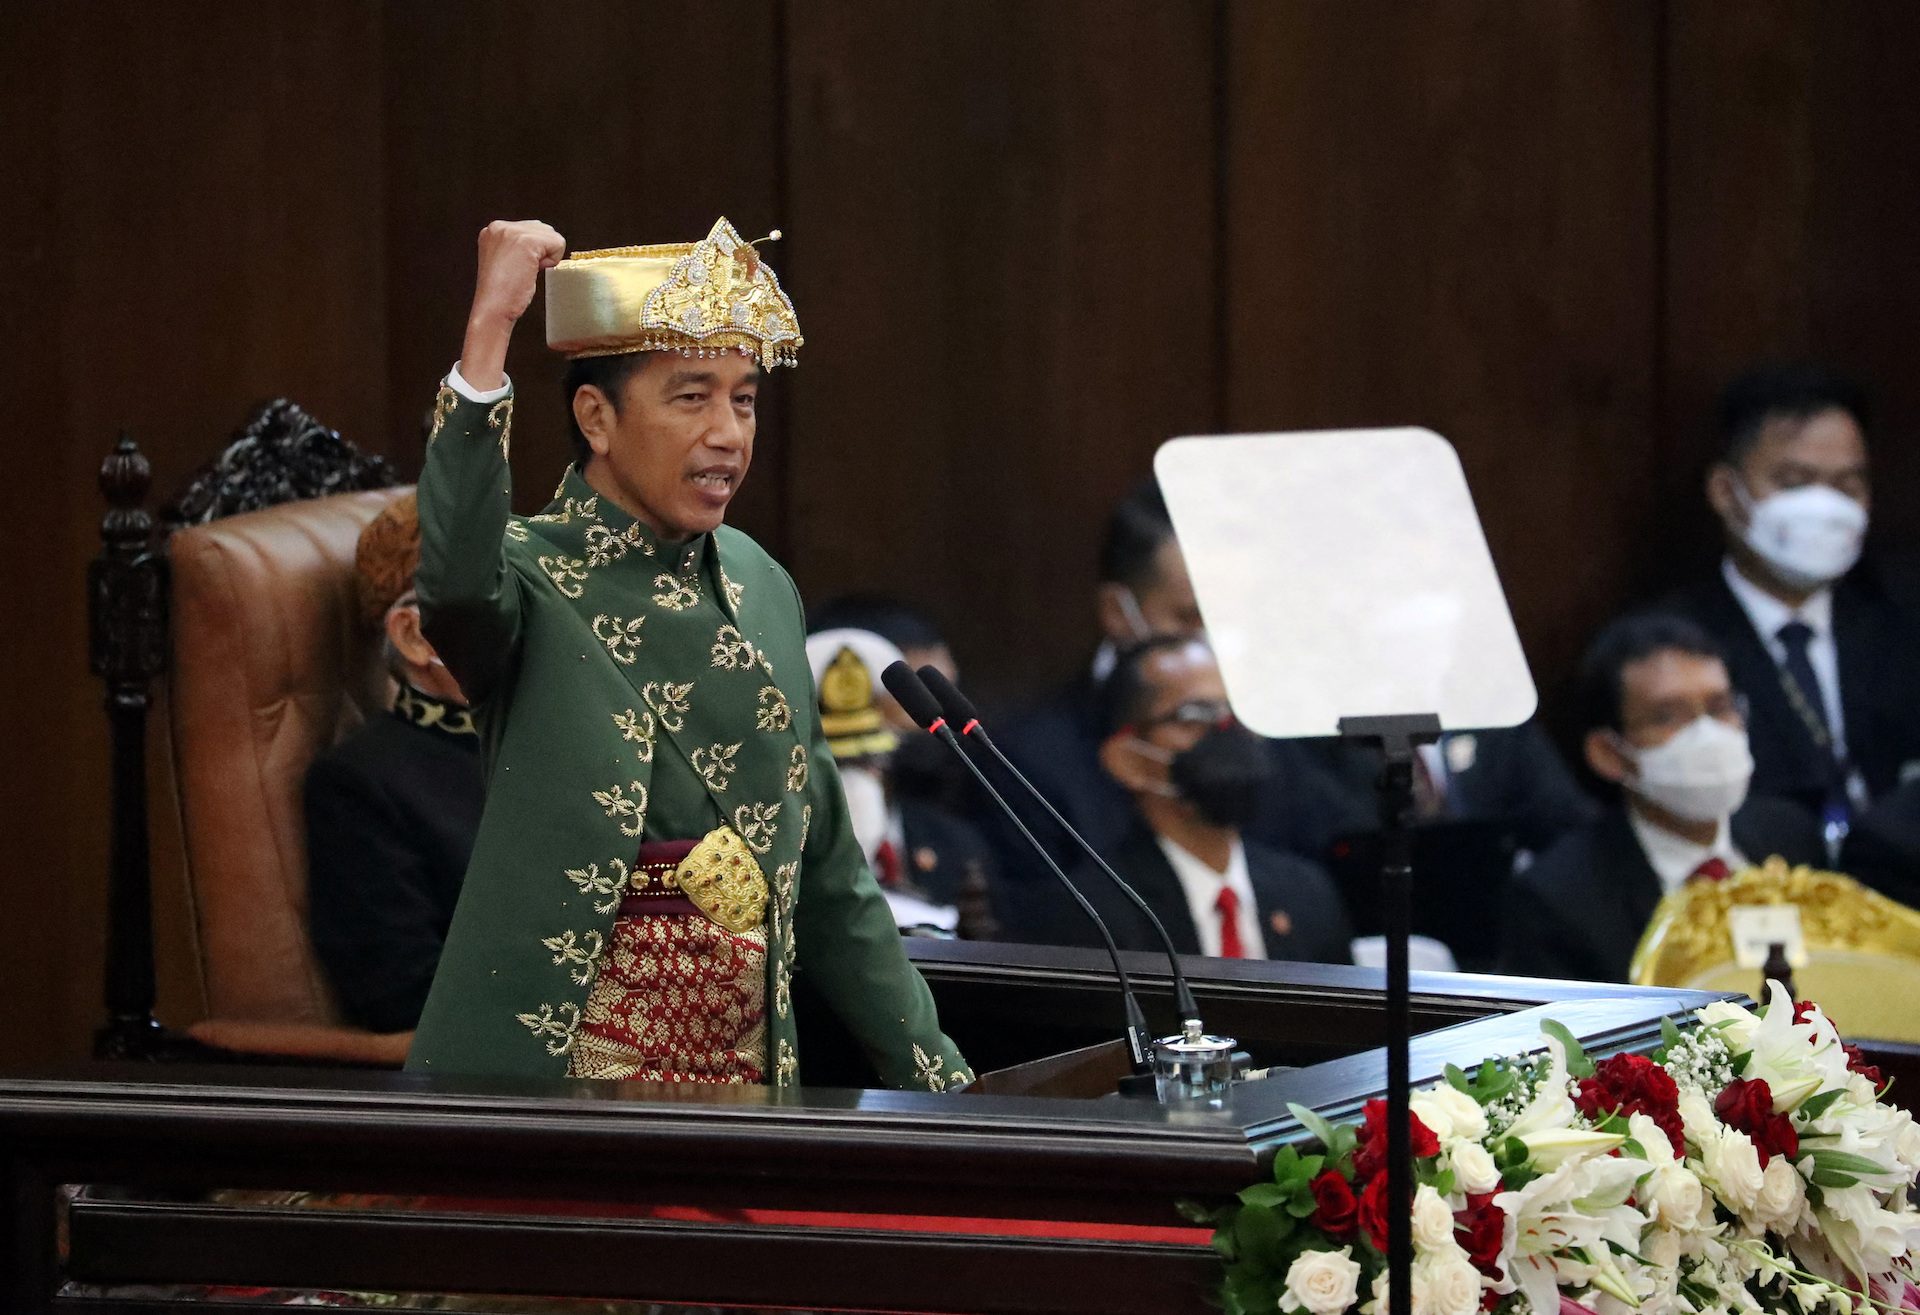 Indonesia at ‘pinnacle of global leadership,’ says Jokowi